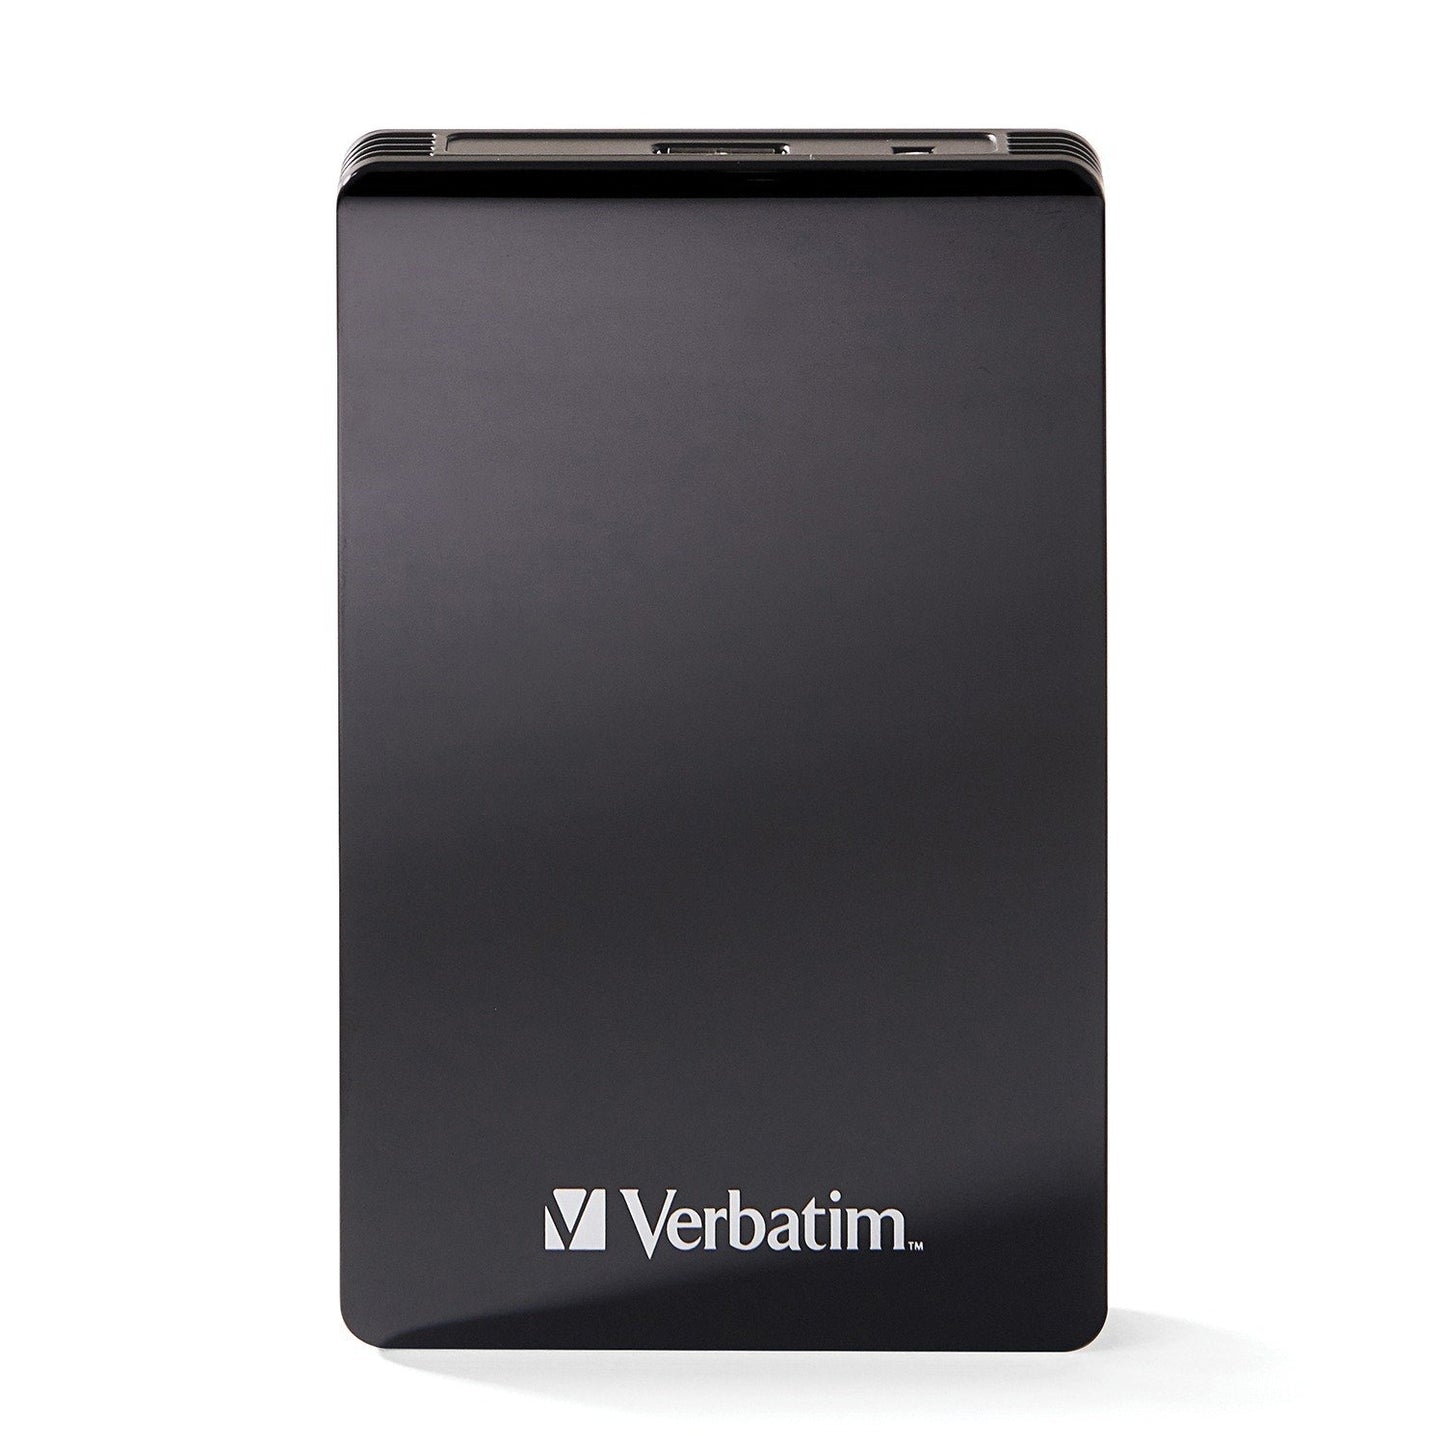 Verbatim 70381 Vx460 USB 3.1 External SSD (128 GB)